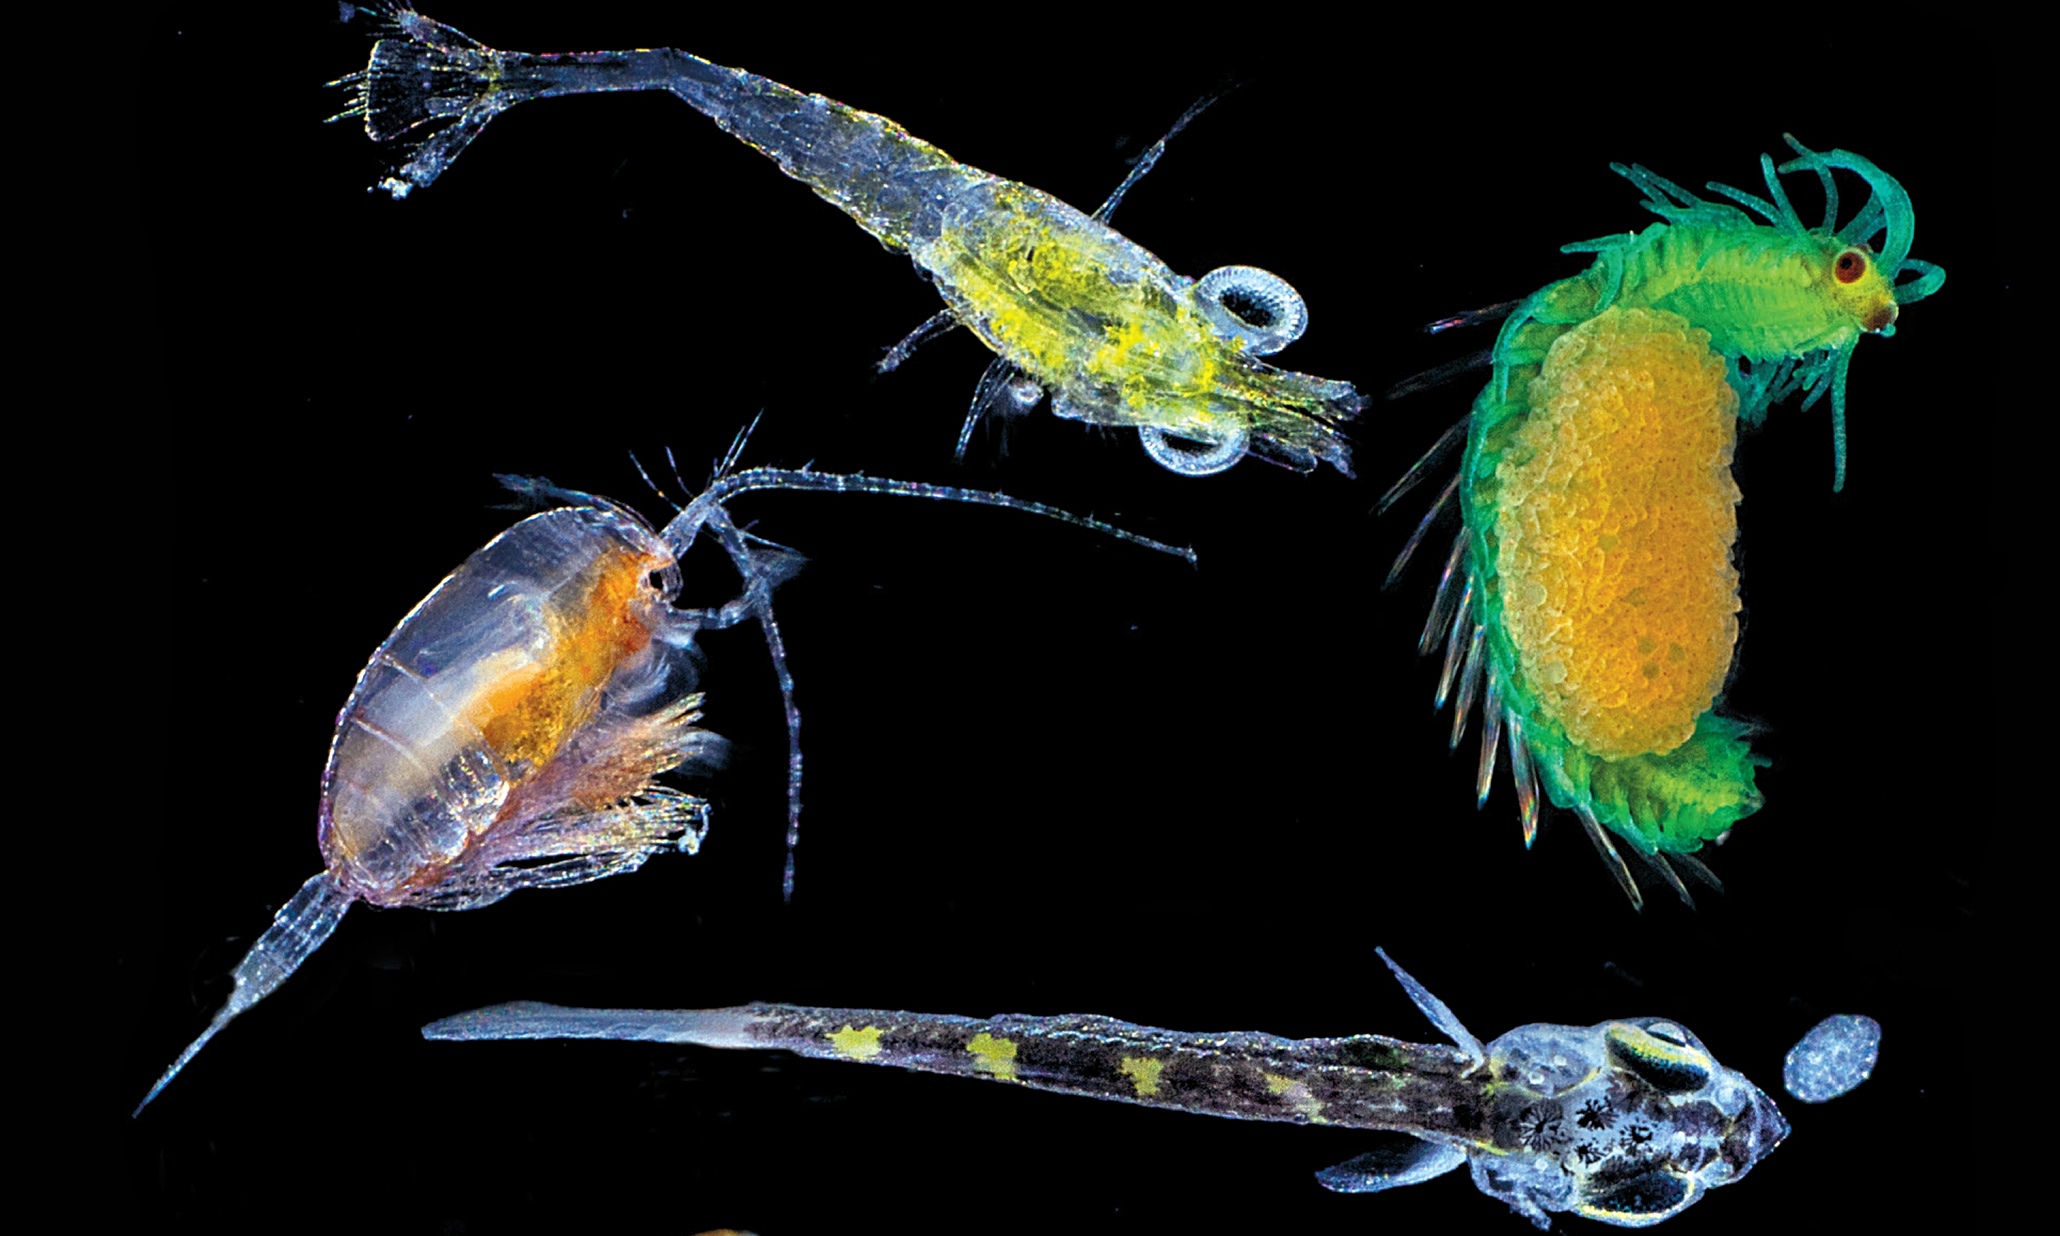 The microscopic magic of plankton